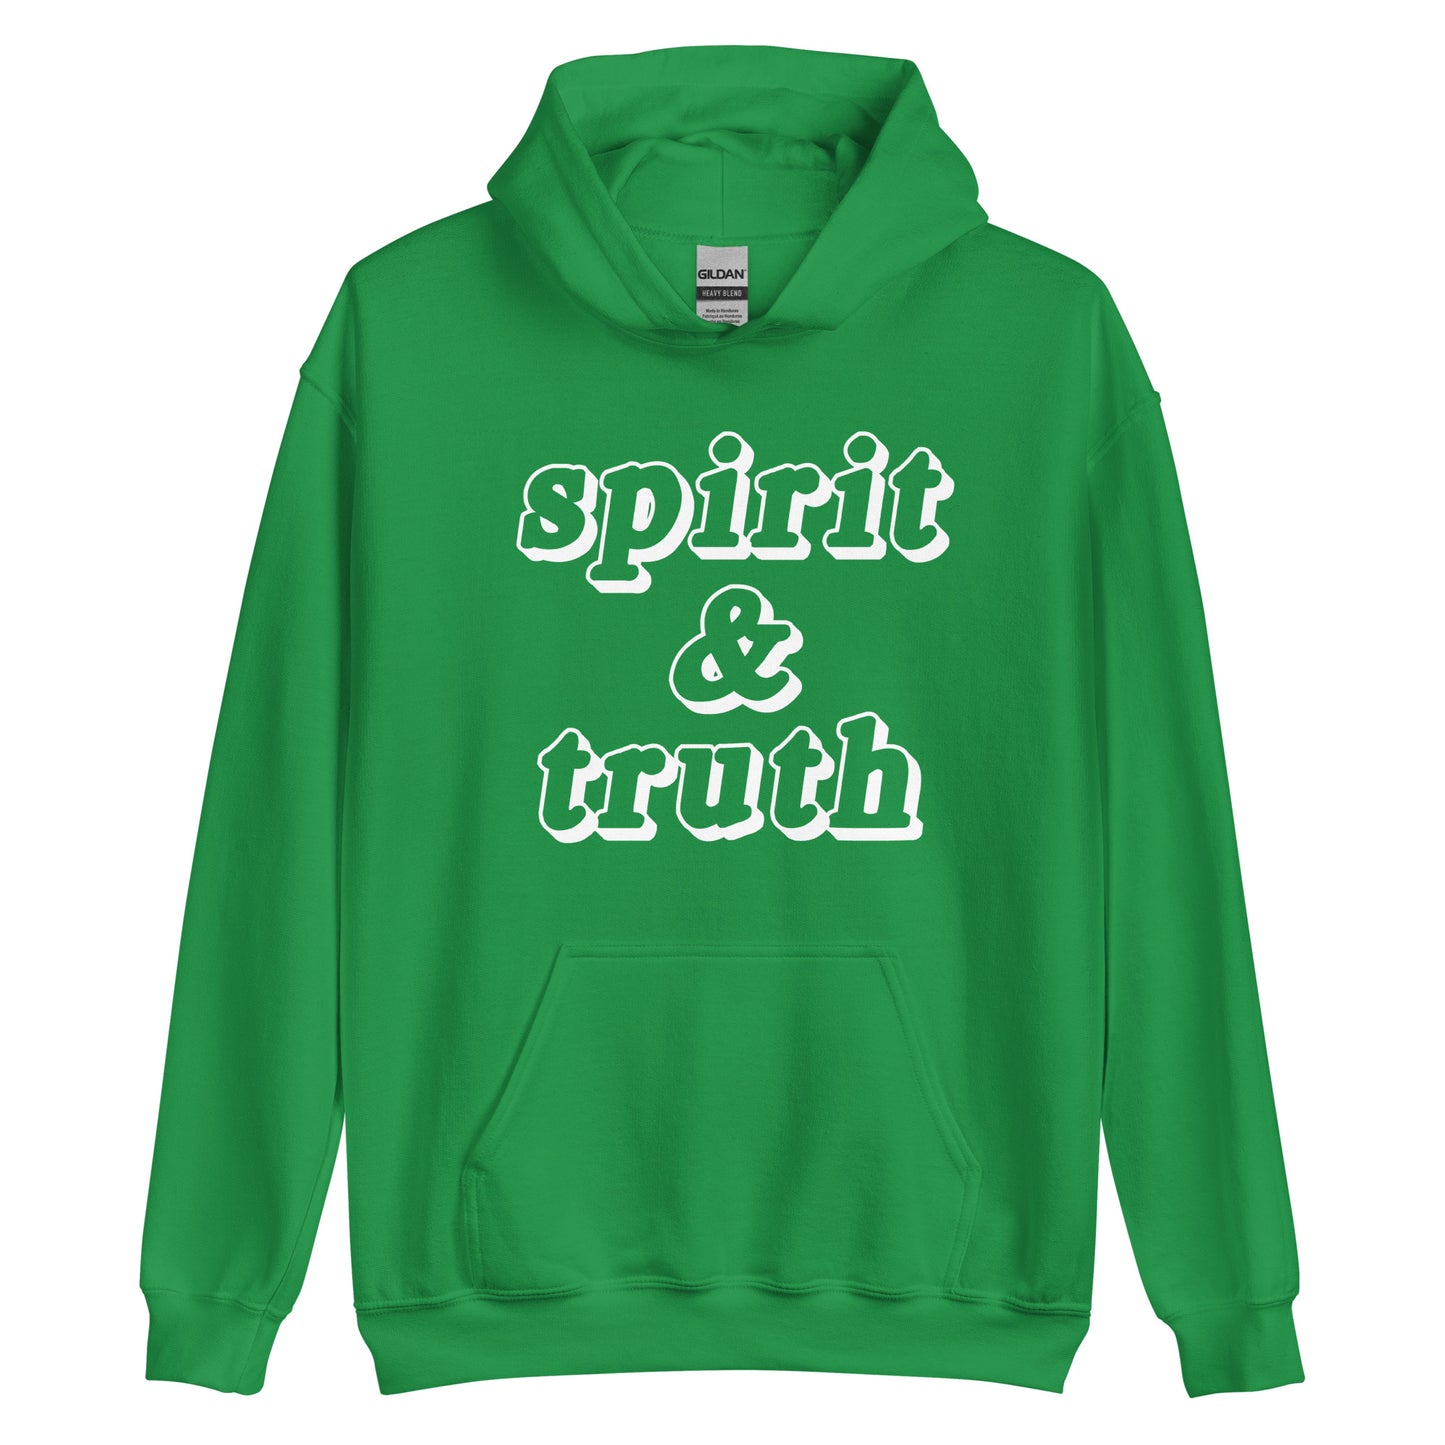 Spirit & Truth - Bridge Worship